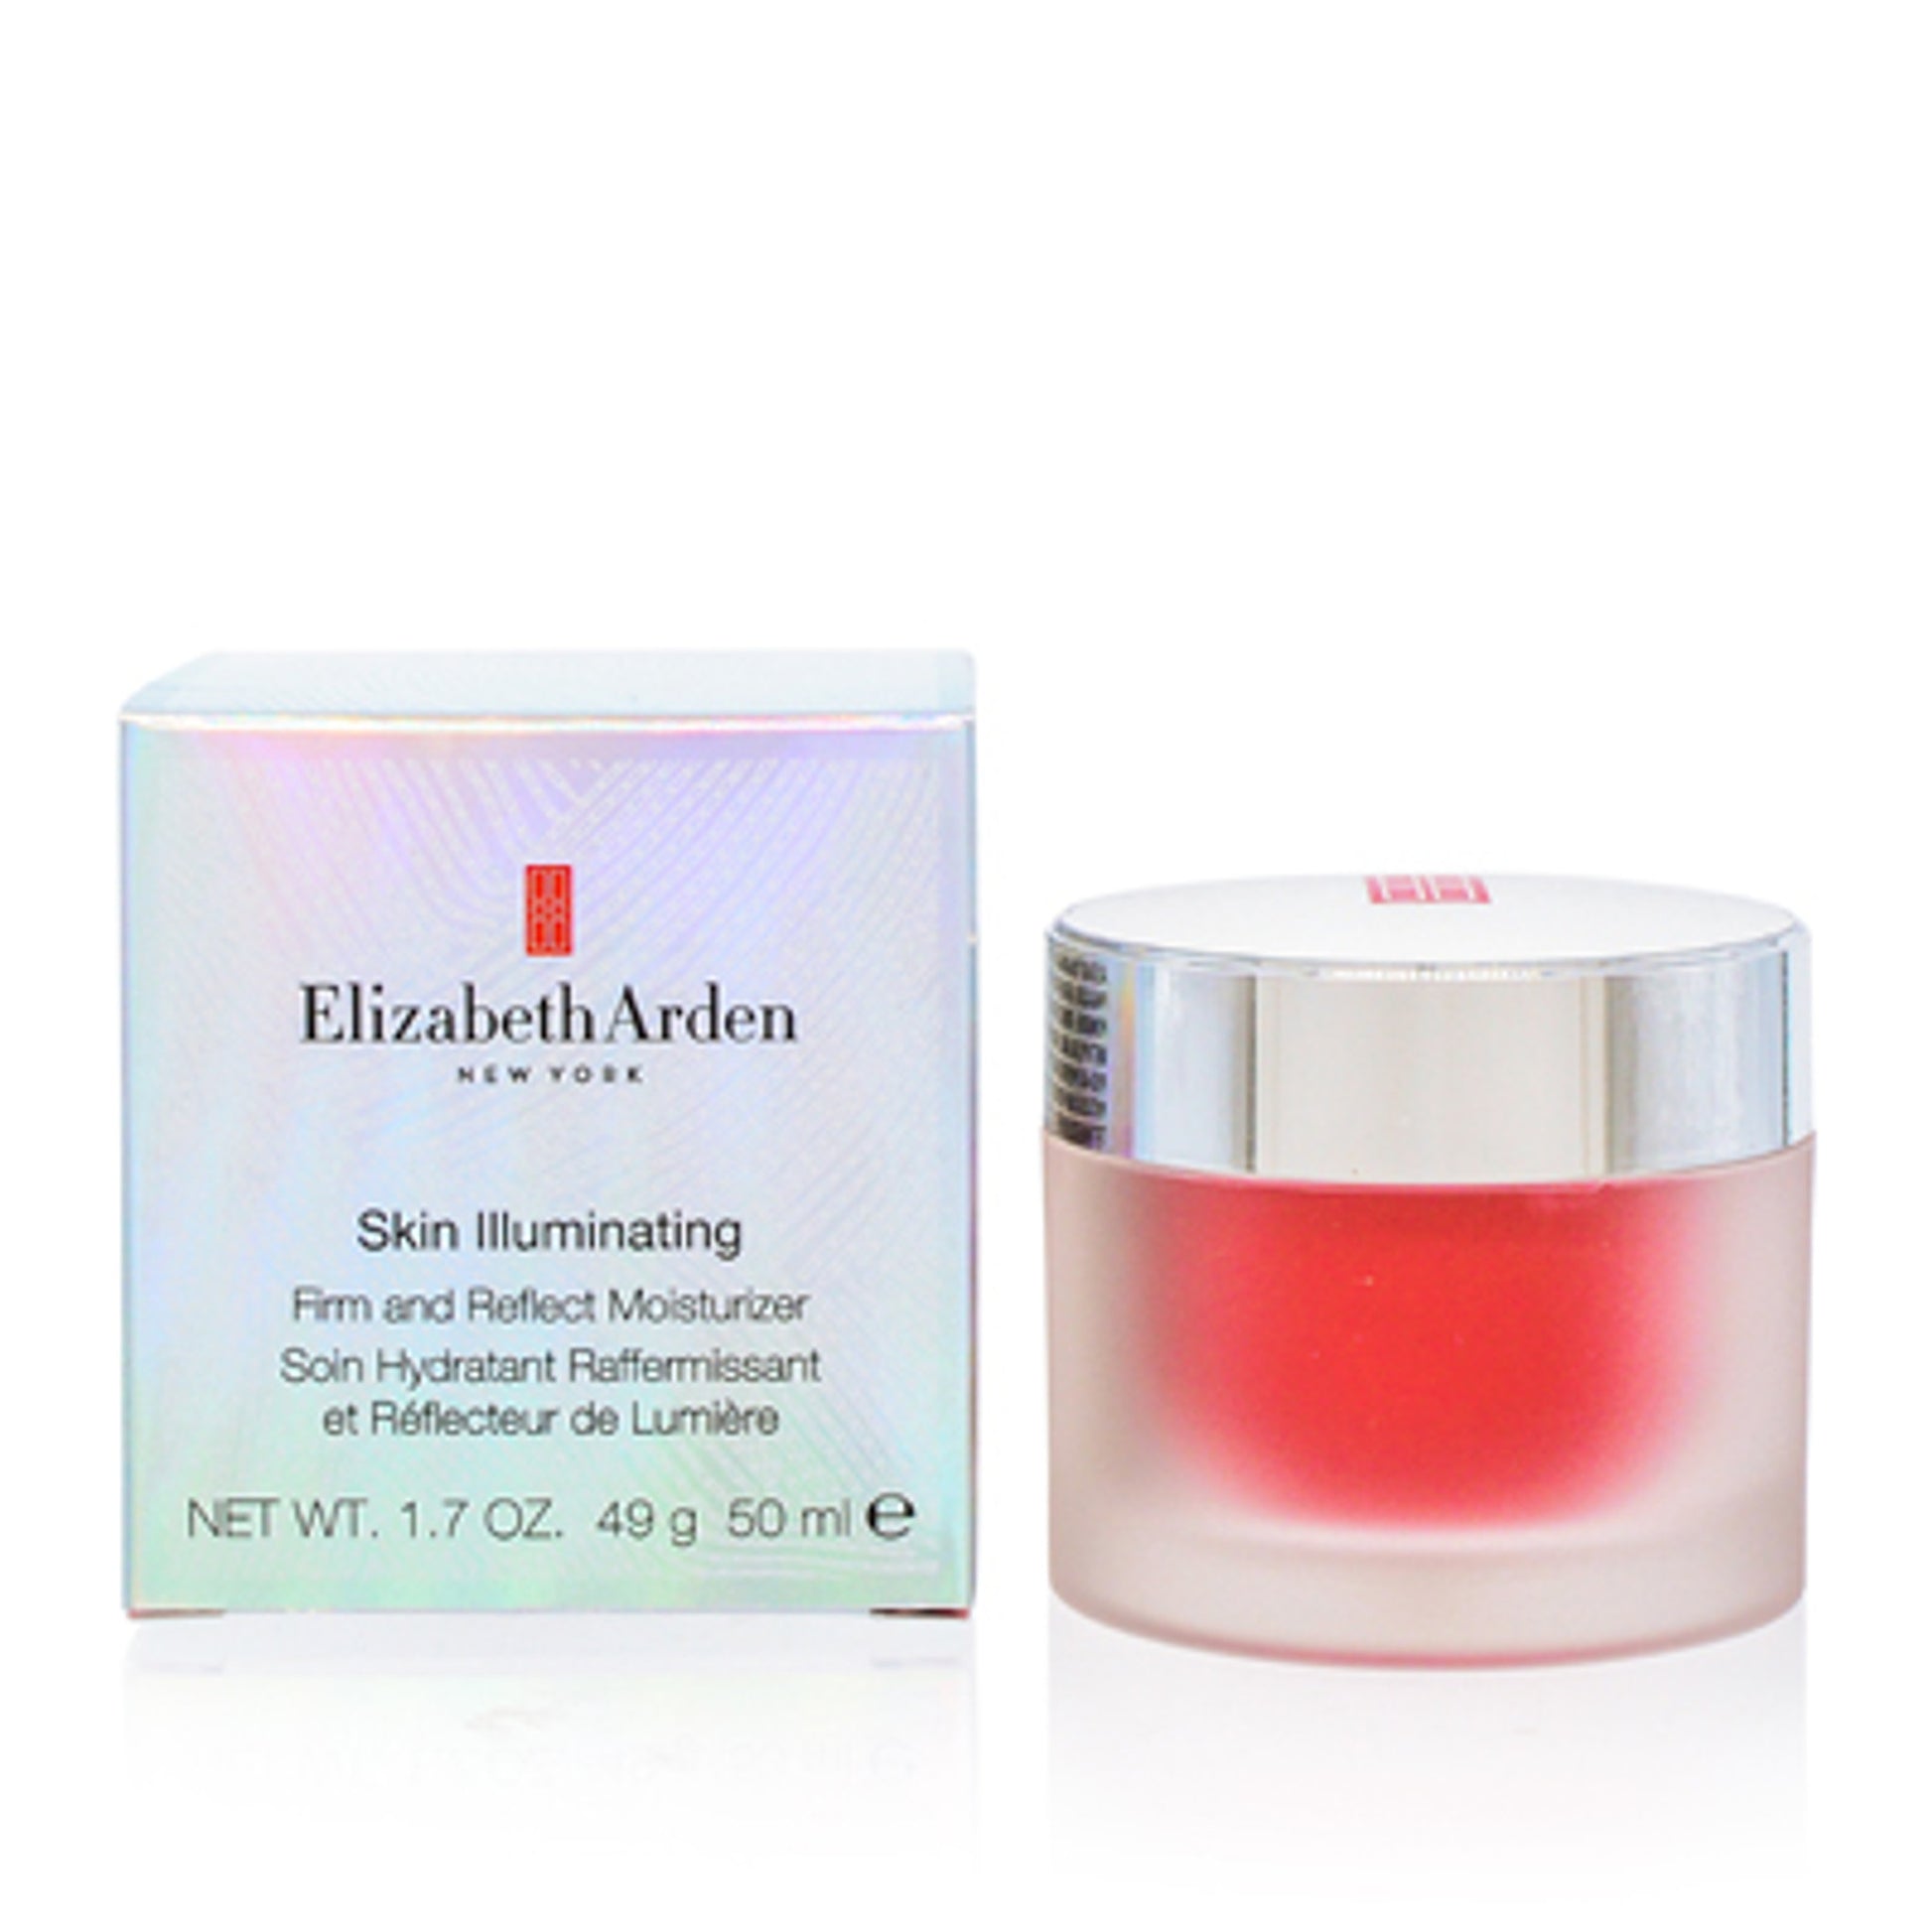 Buy Elizabeth Arden Skin Illuminating Firm And Reflect Moisturizer - 50ml in Pakistan